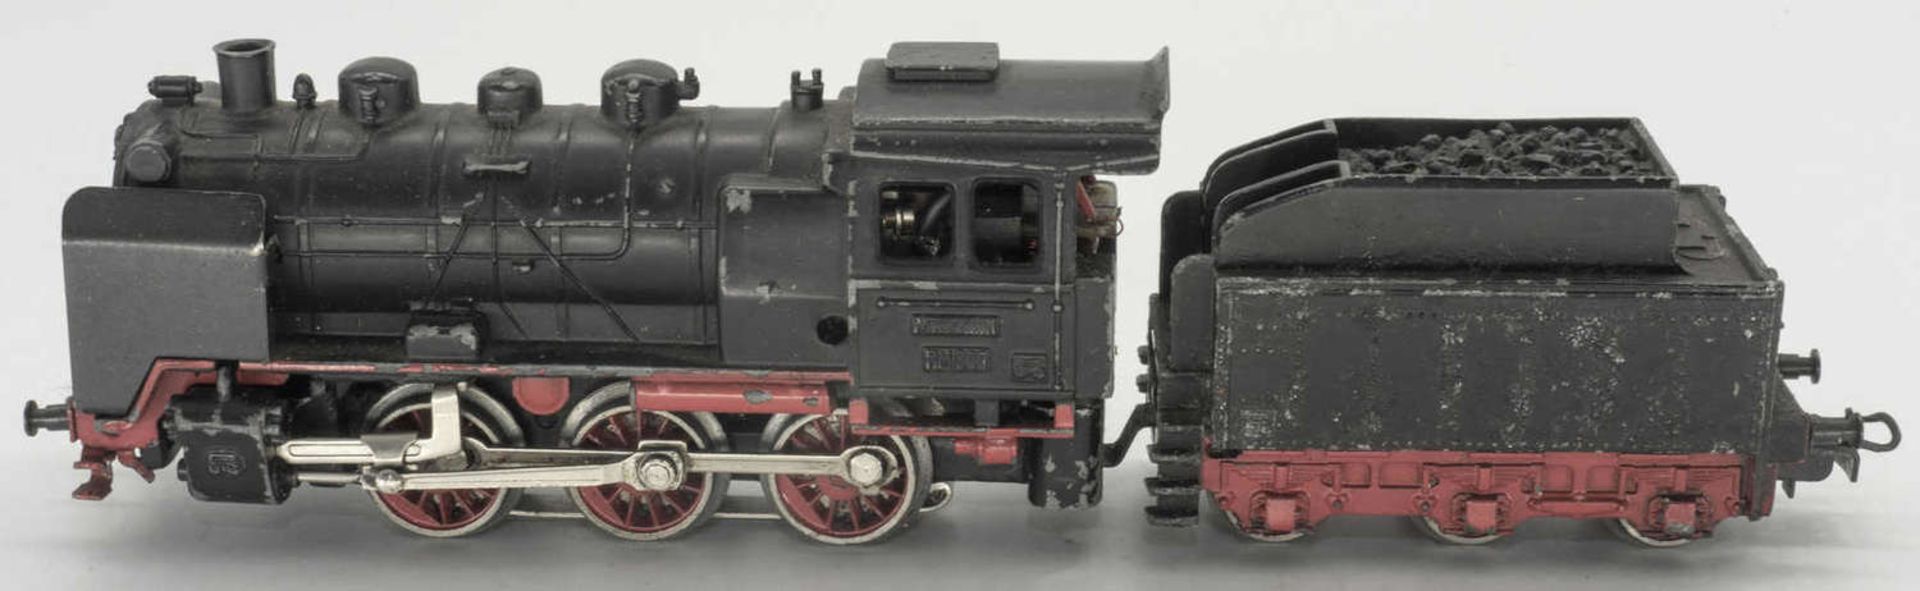 Märklin RM 800, Dampflokomotive mit Schlepptender, Guss, Spur H0, gebraucht.Märklin RM 800, steam